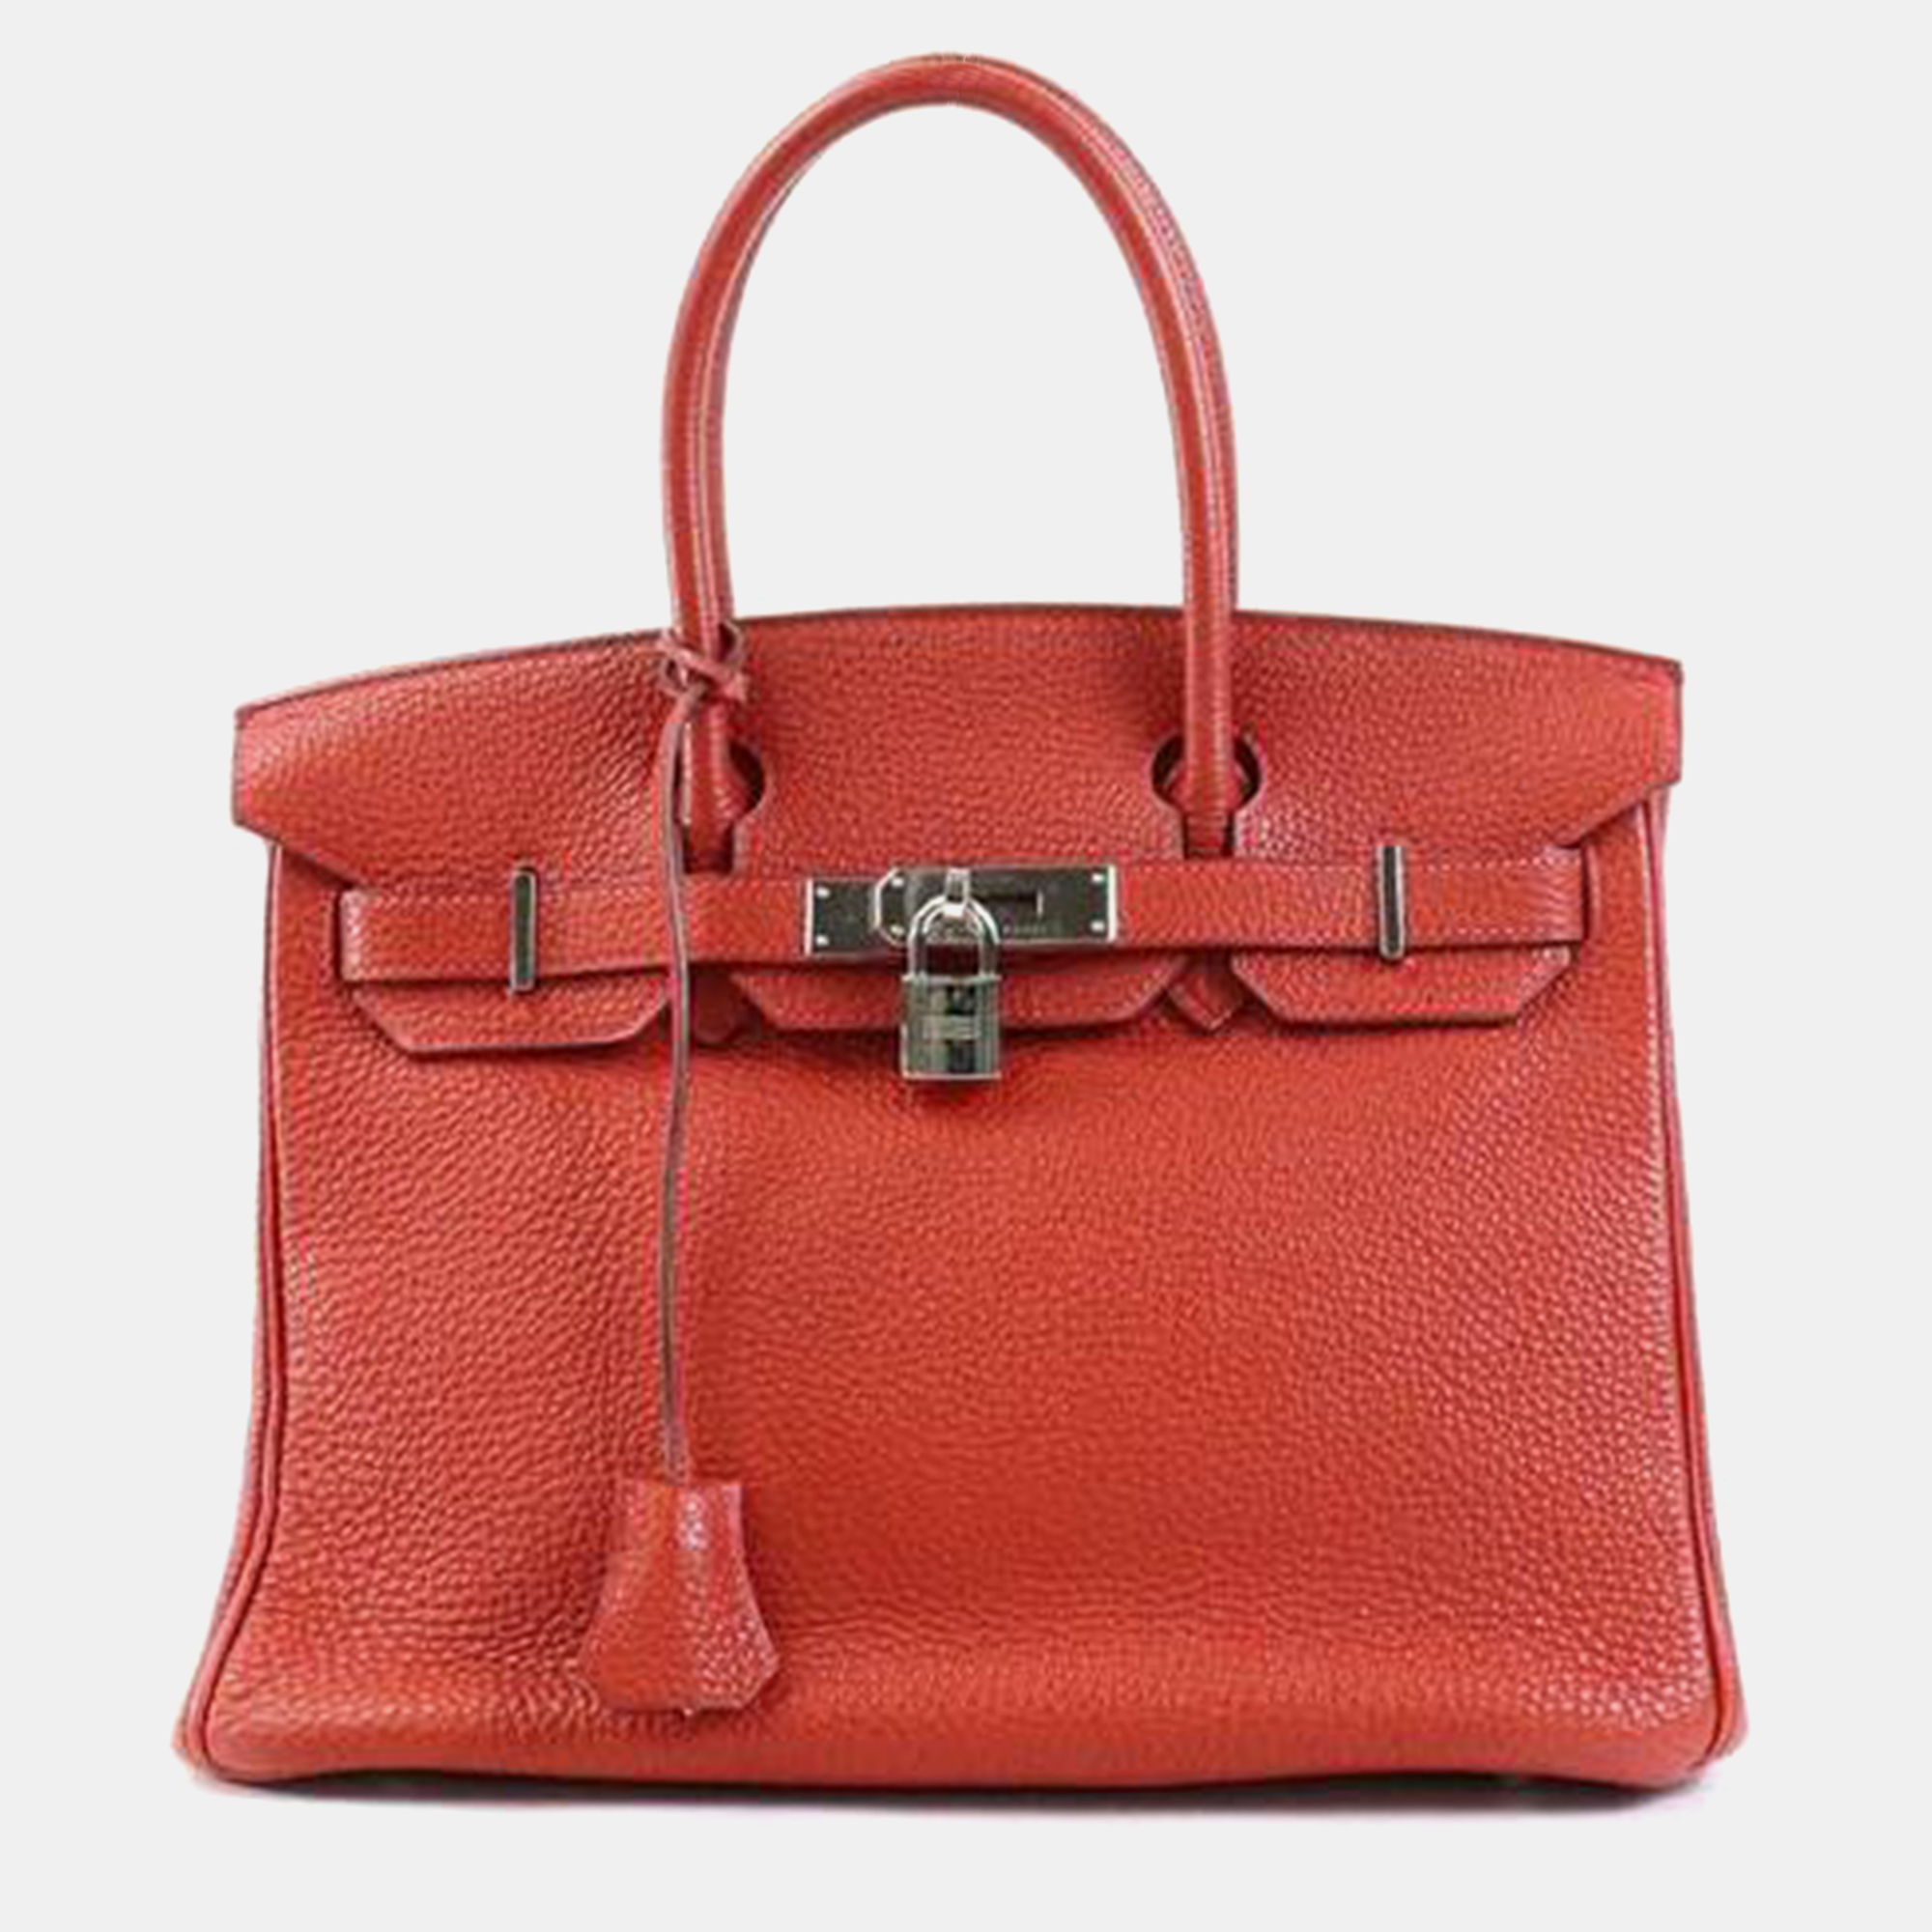 

Hermes Red Togo Leather Birkin 30 Tote Bag, Brown